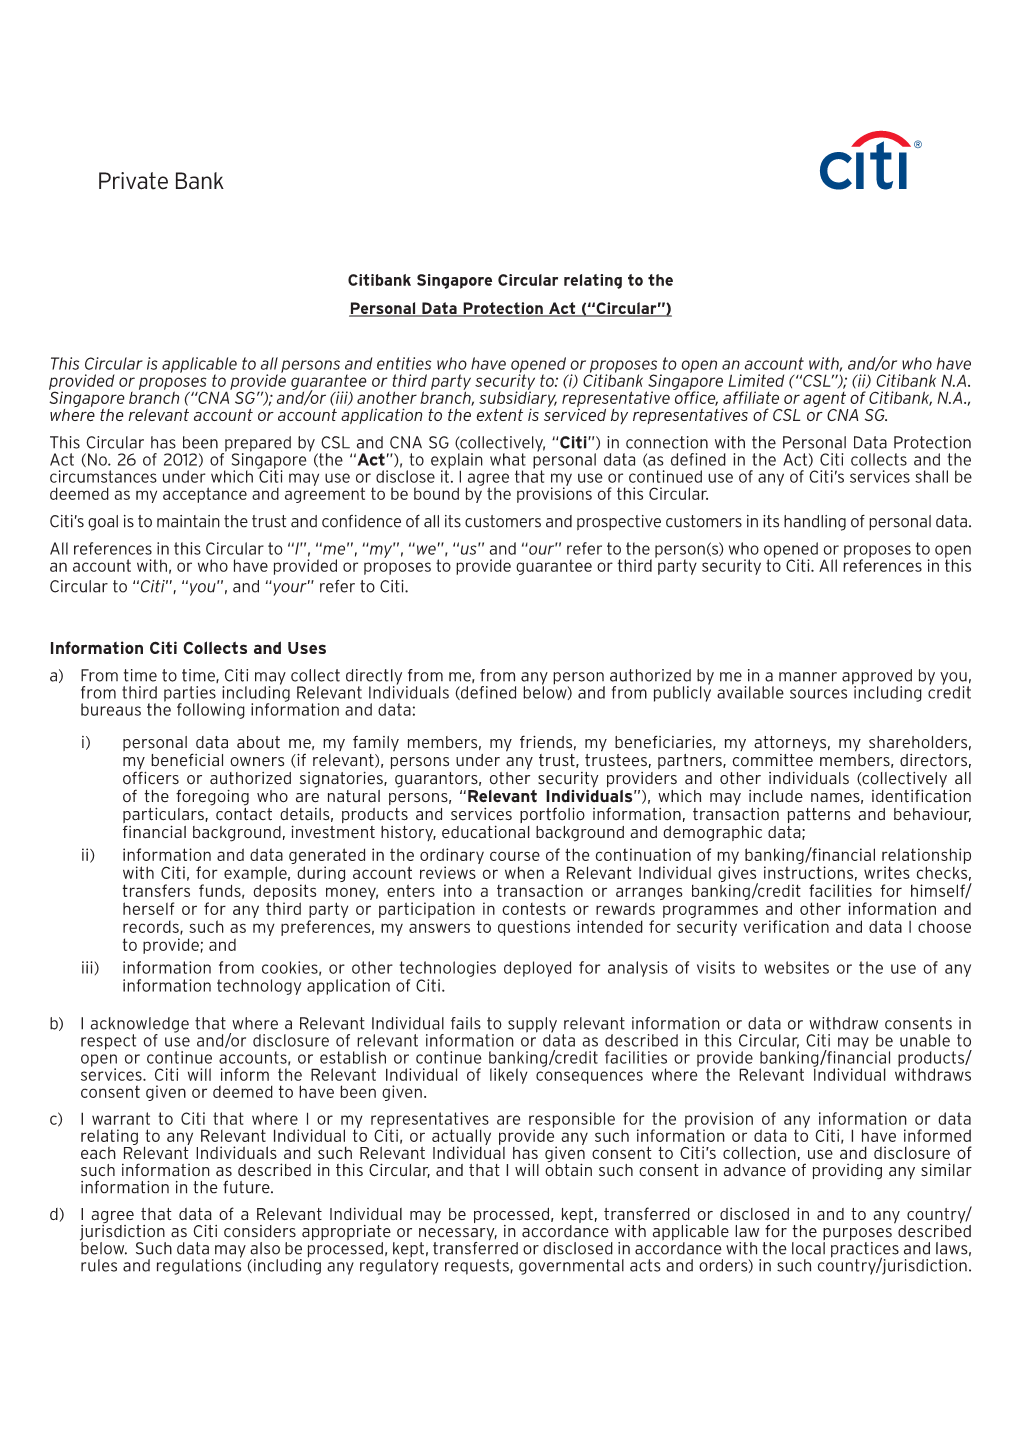 Citibank Singapore Circular Relating to the Personal Data Protection Act (“Circular”)